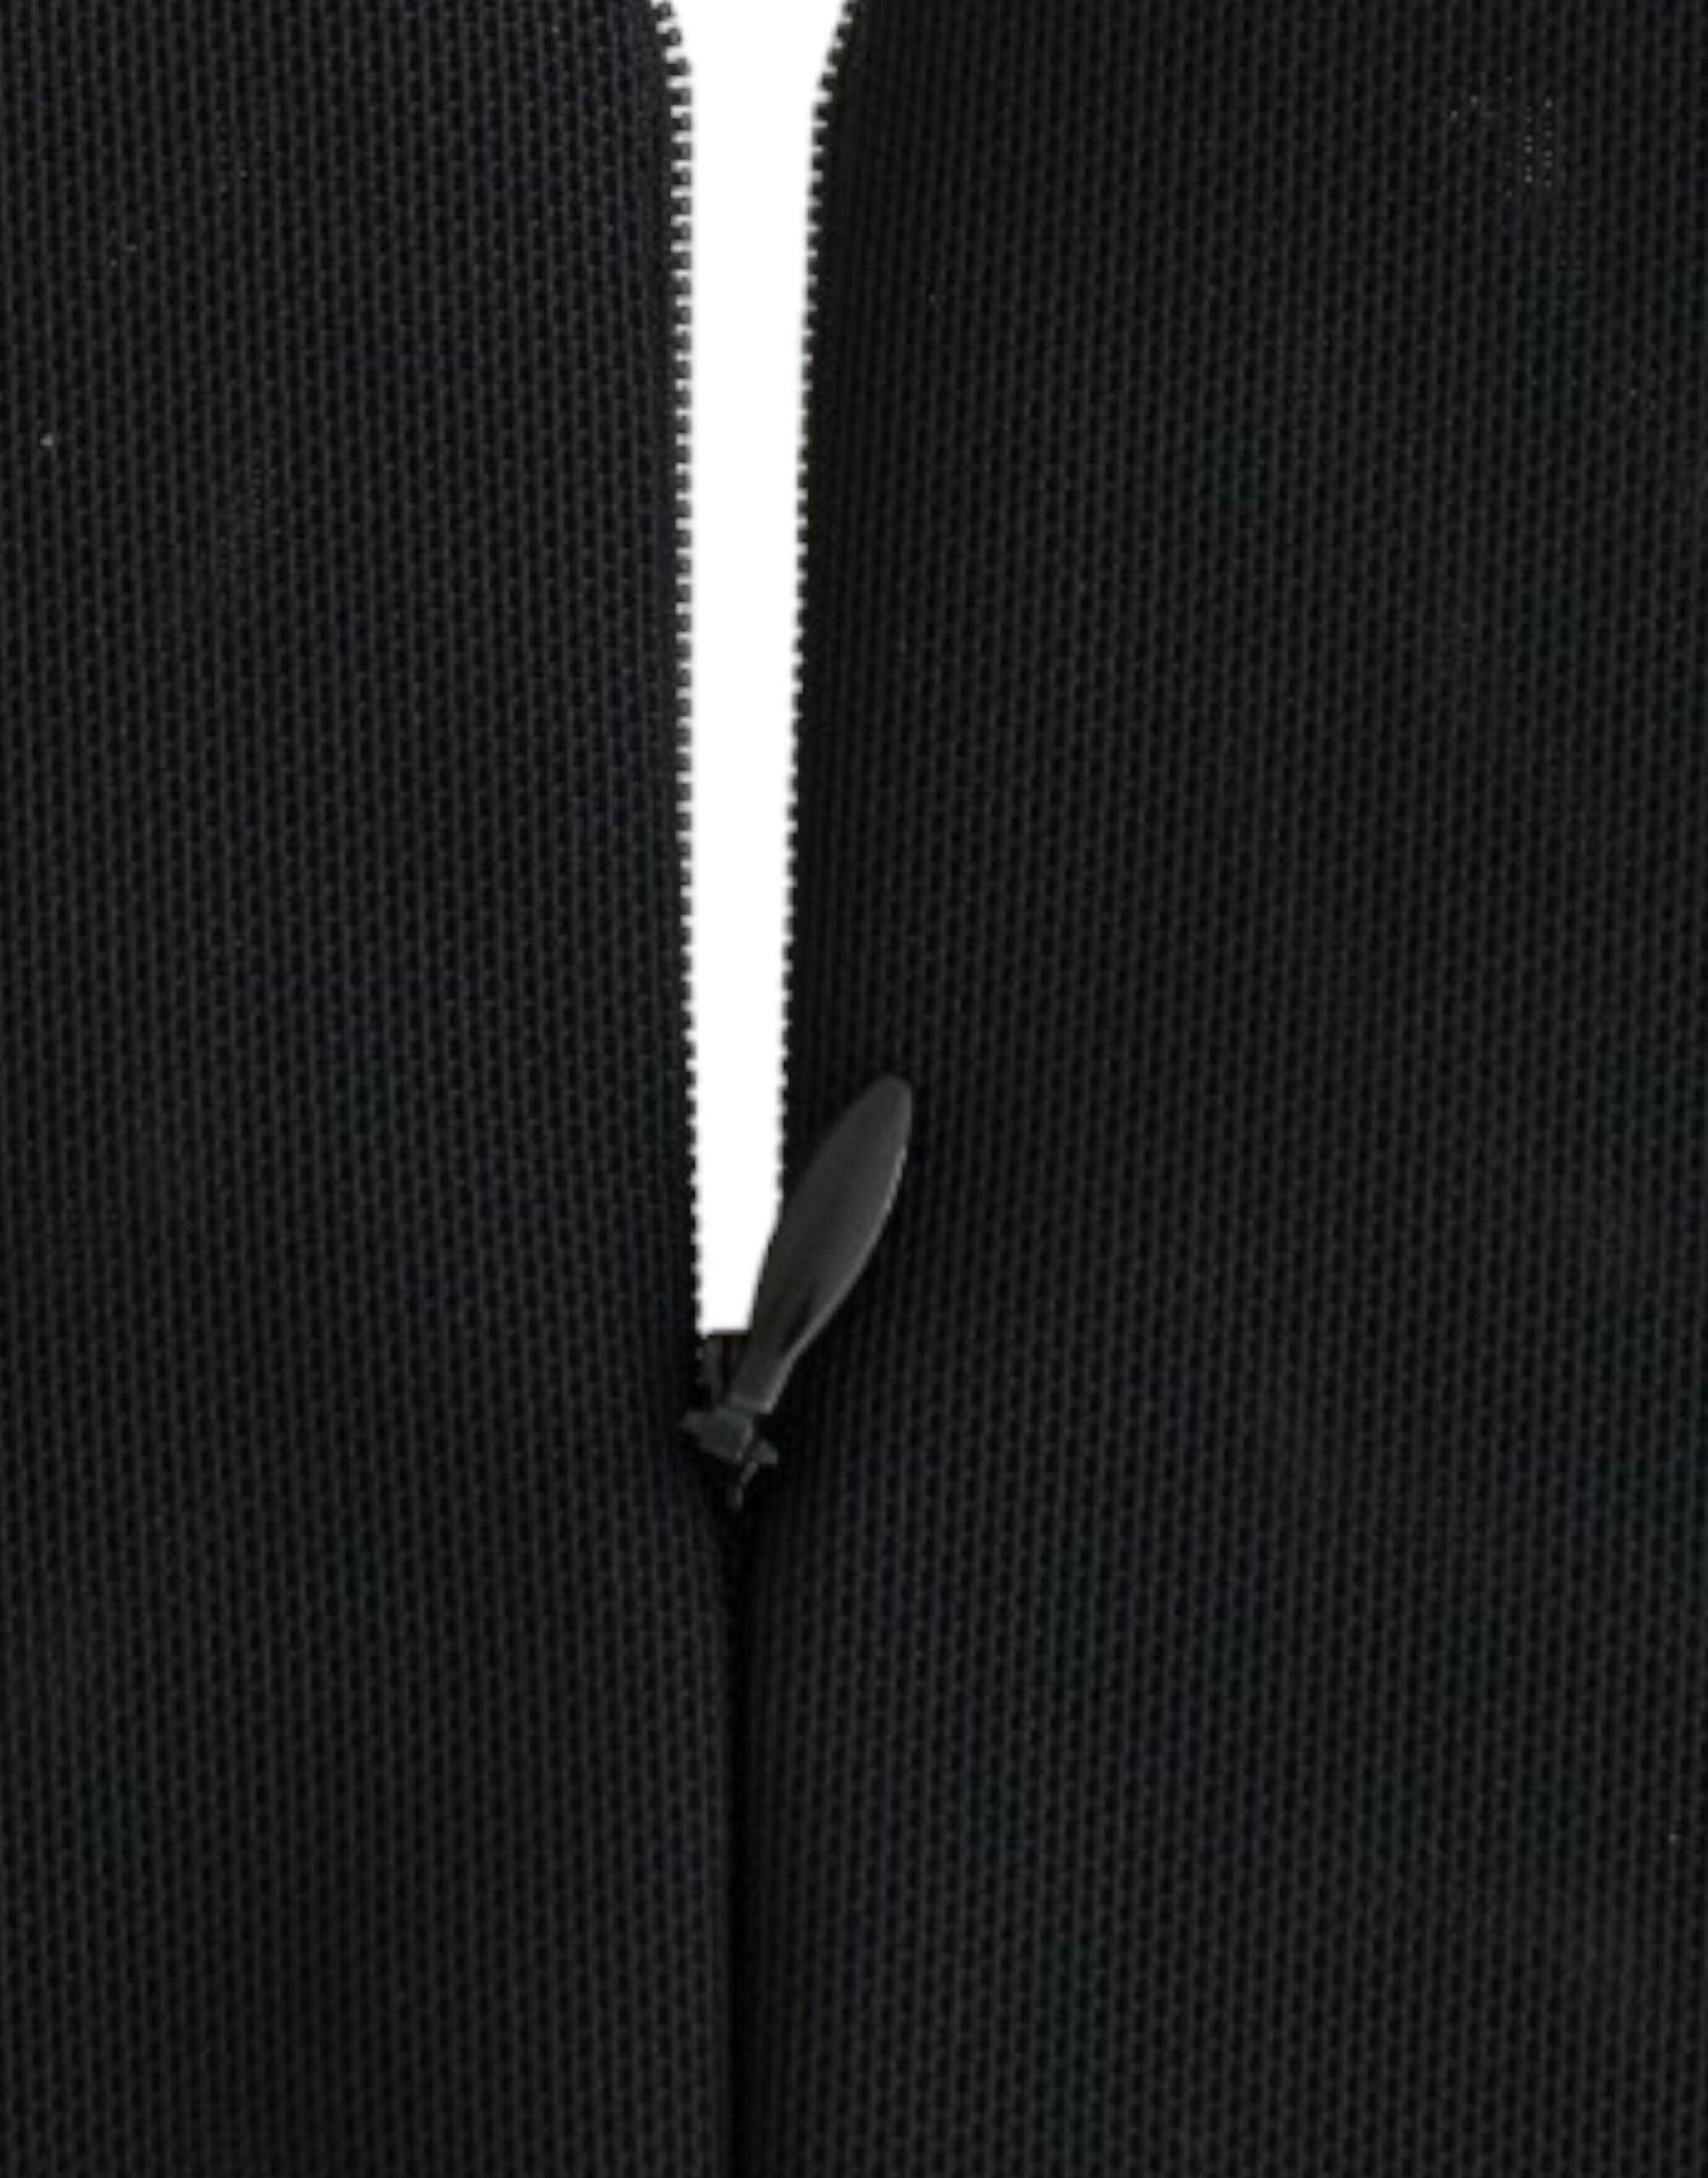 CO|TE Elegant Black Short Sleeve Venus Dress - PER.FASHION